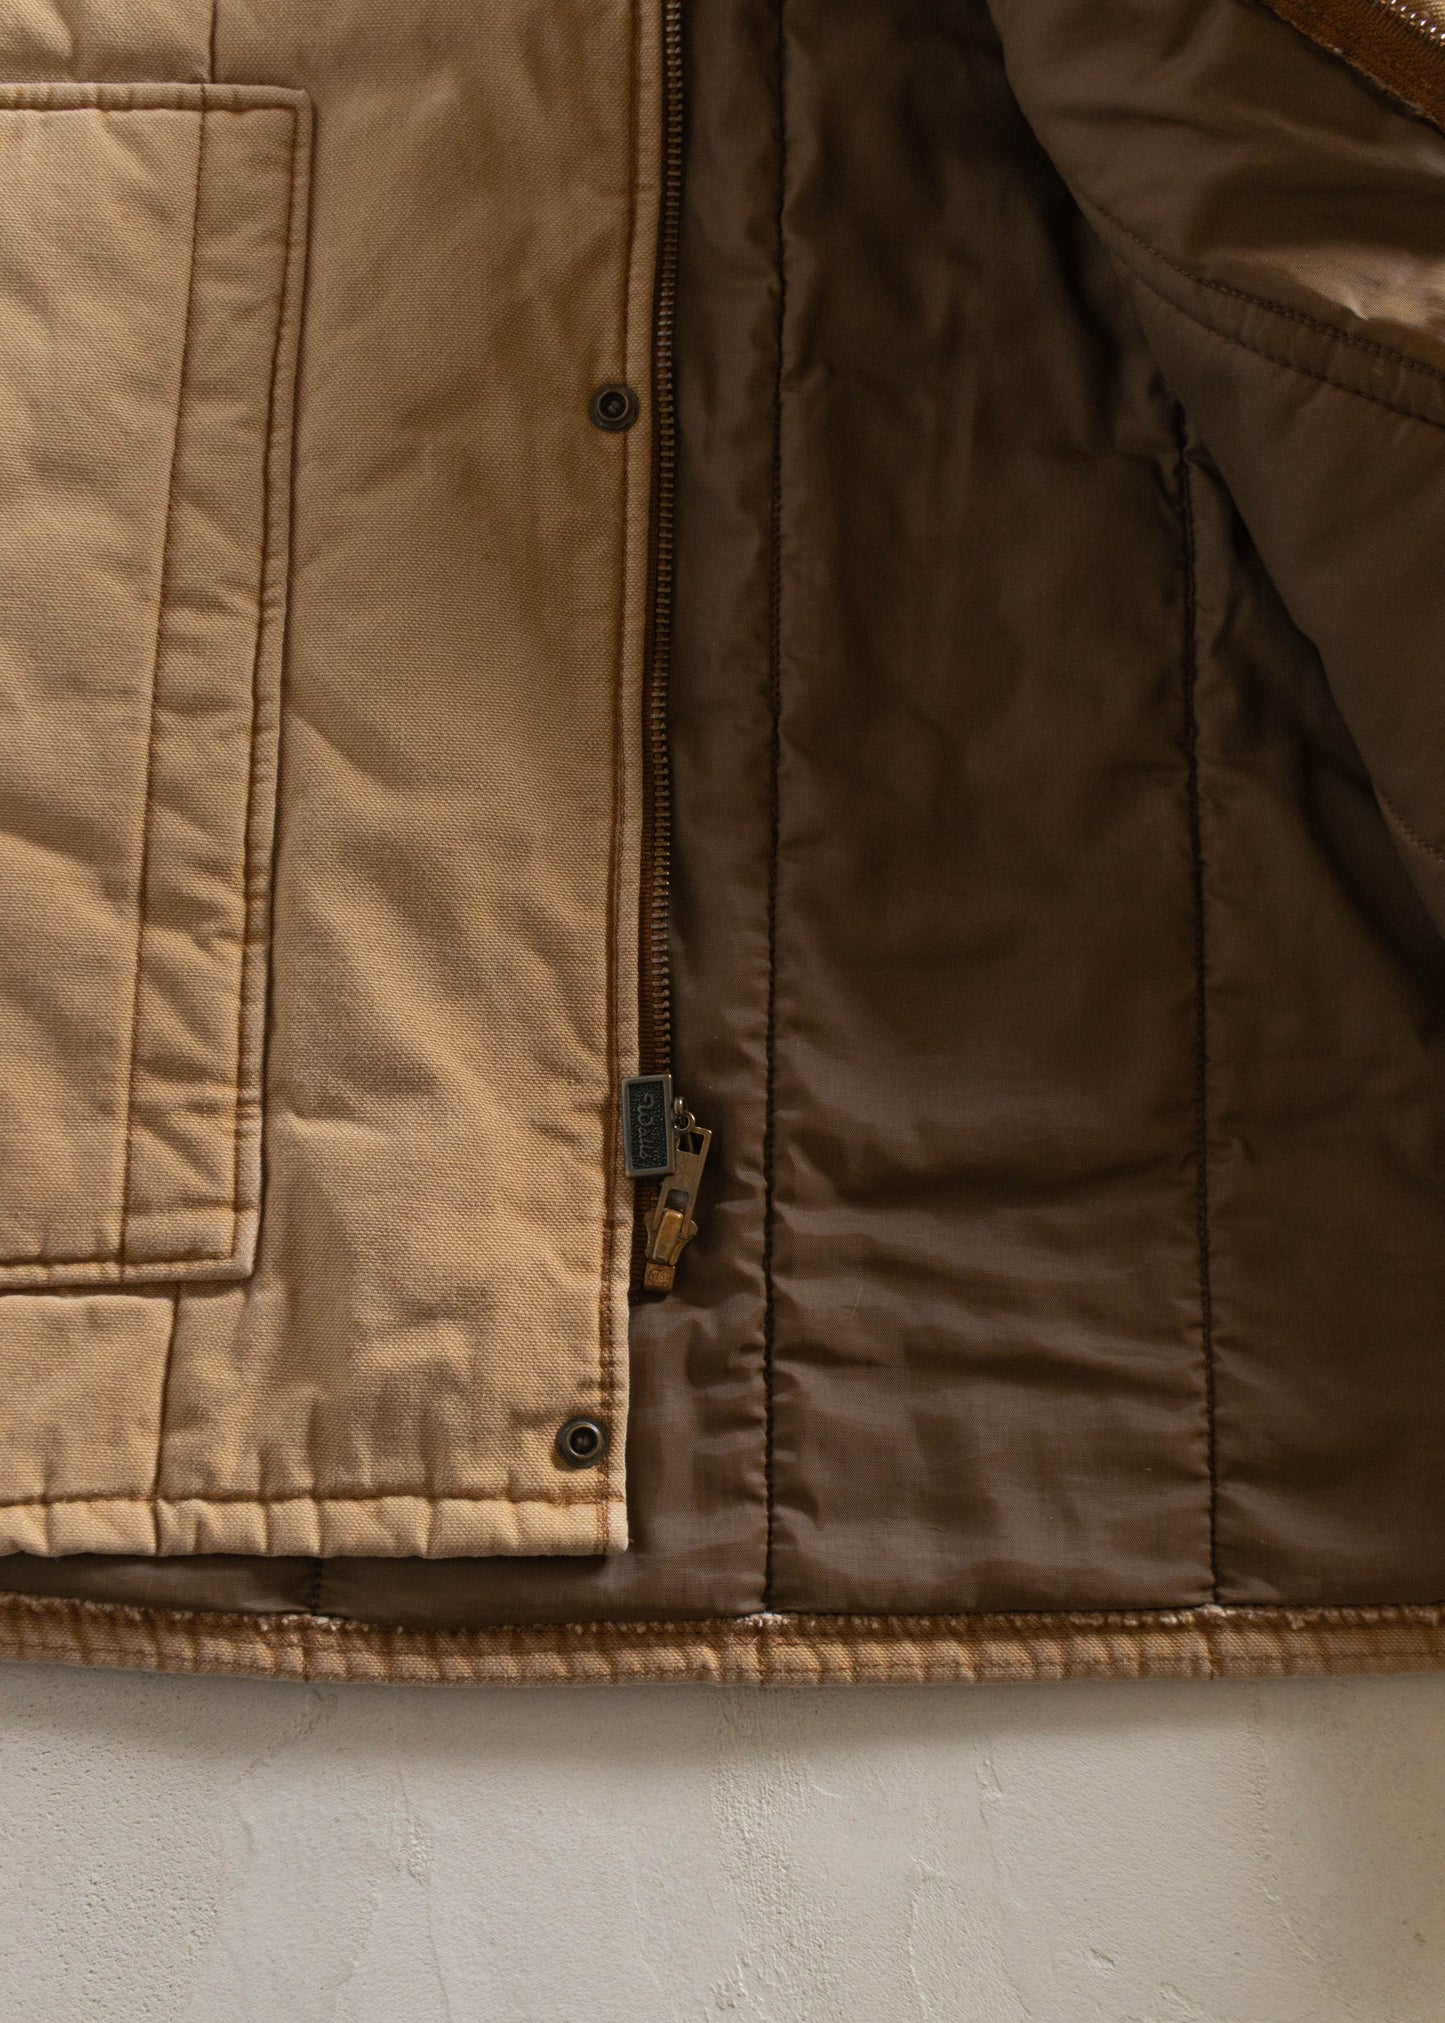 1980s Walls Blizzard-Pruf Chore Workwear Jacket Size M/L